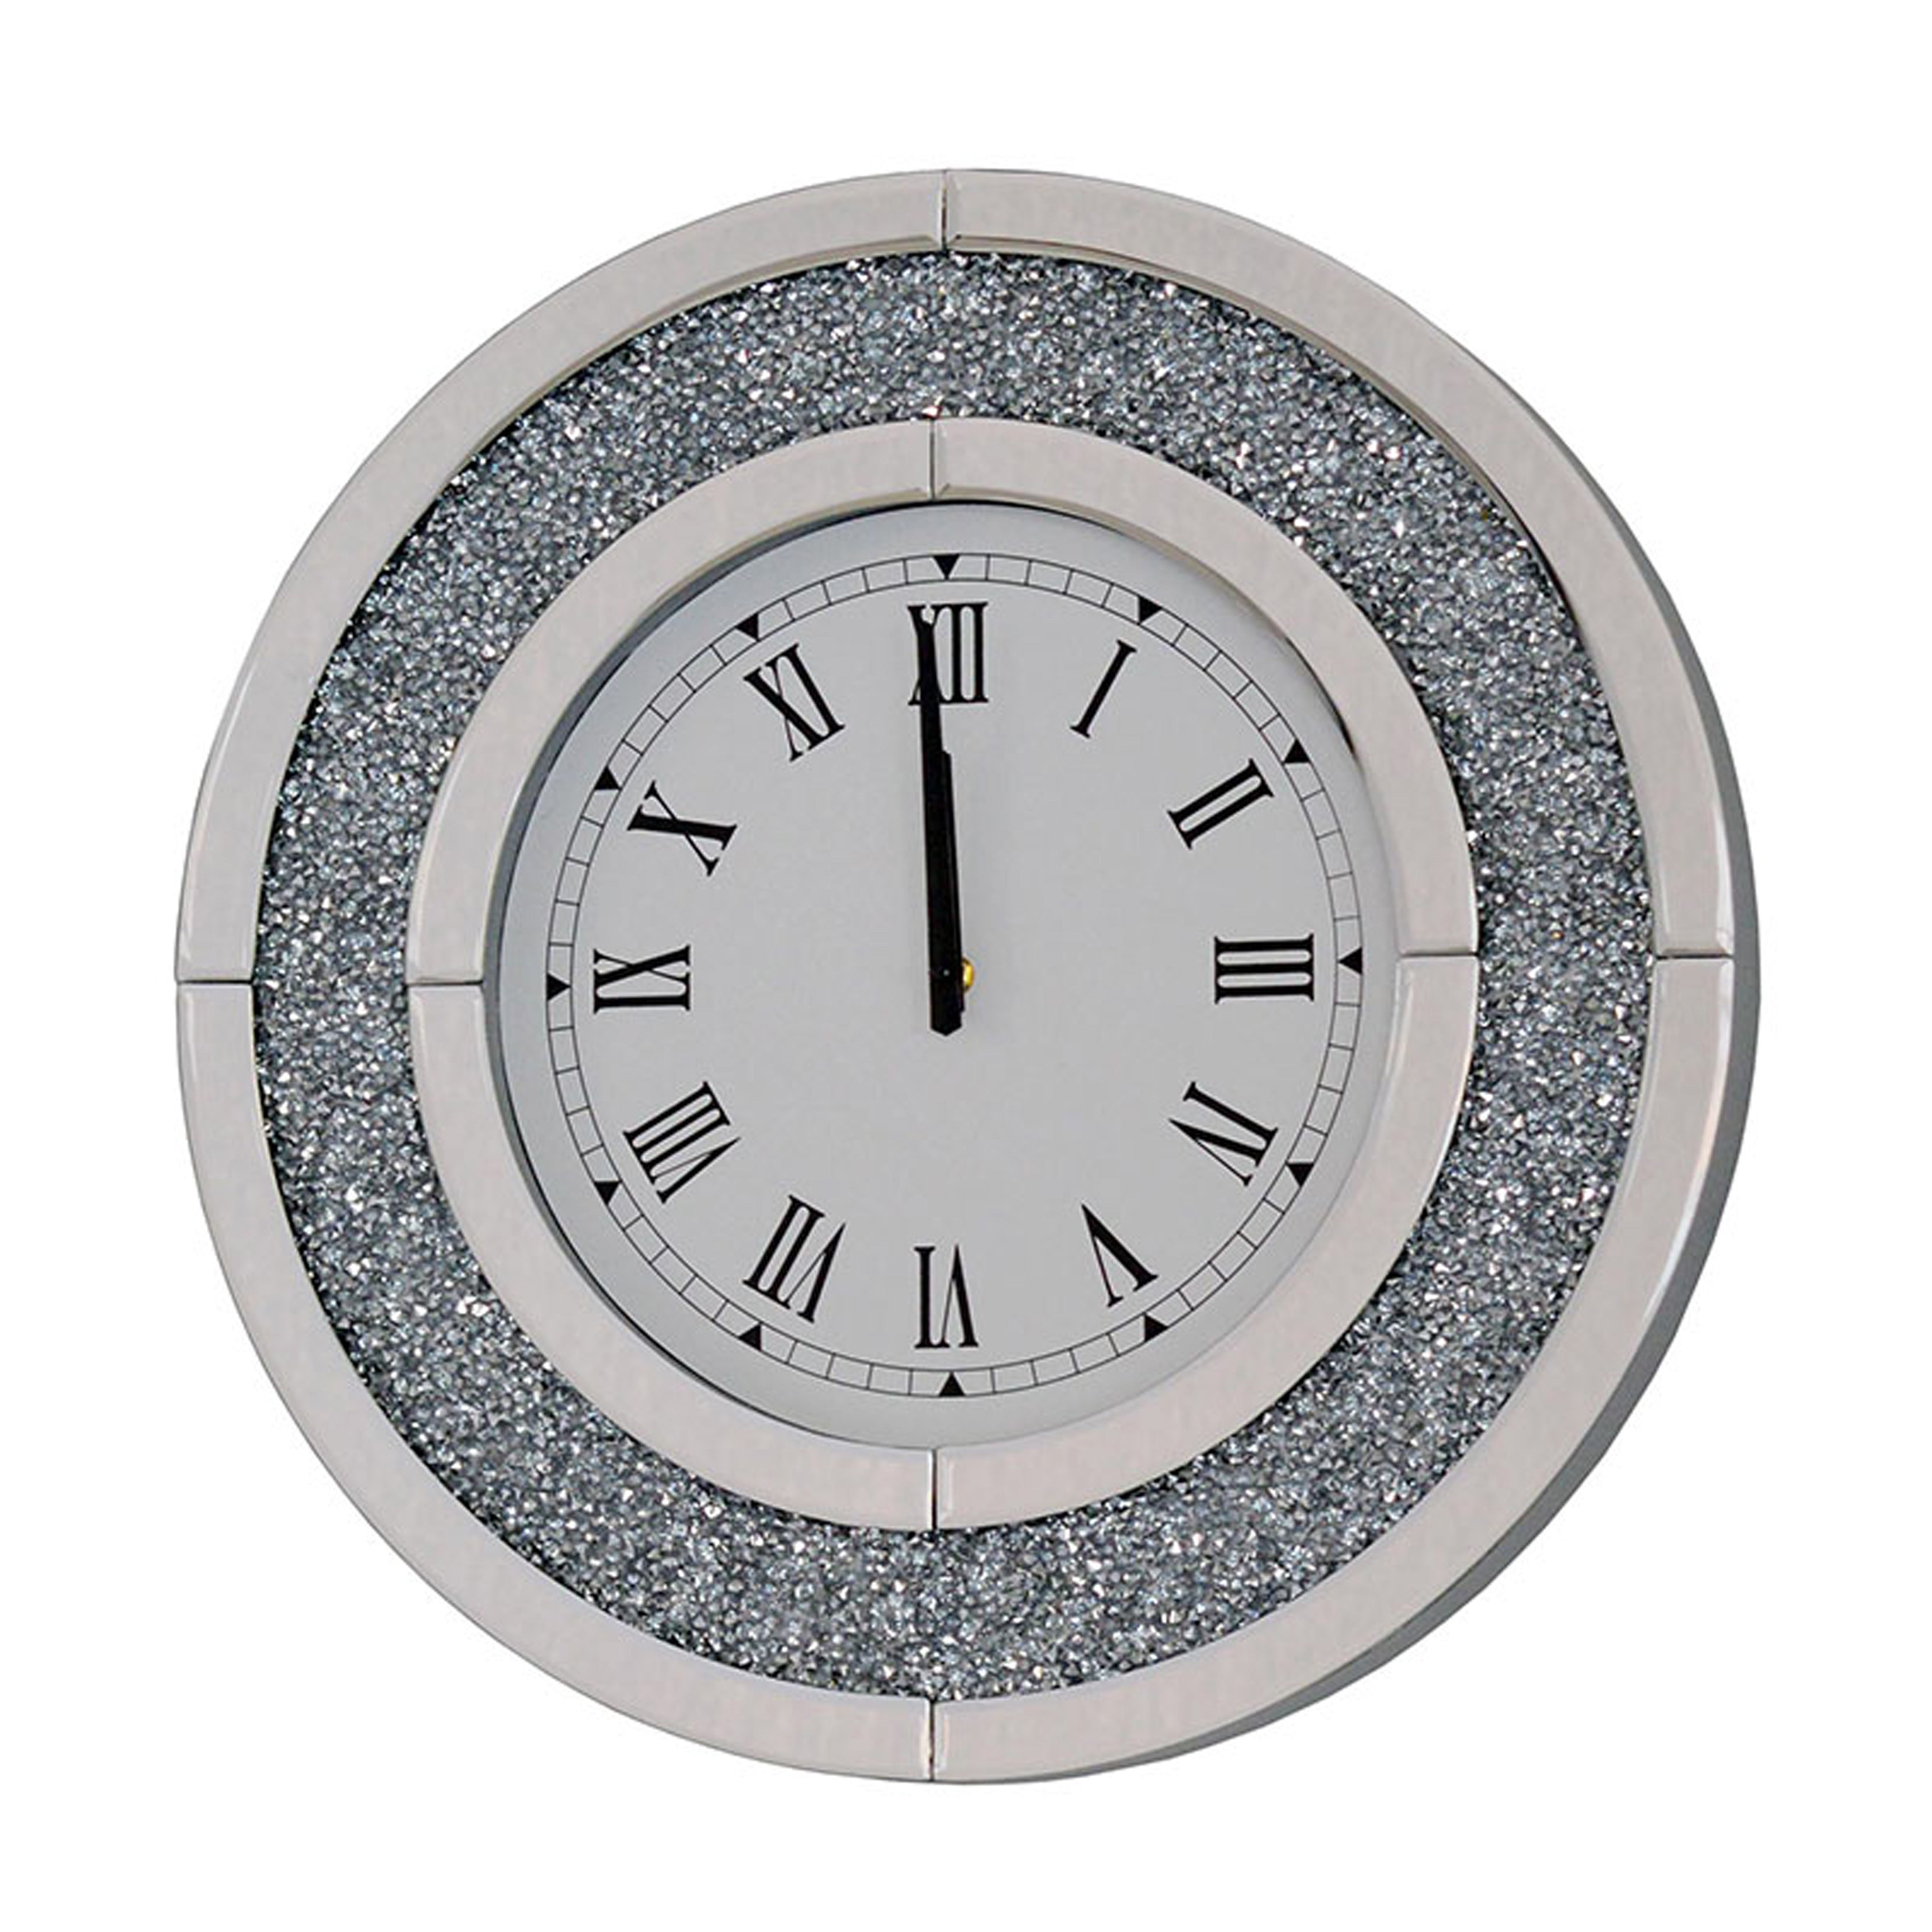 Glitzy Round Roman Style Wall Clock